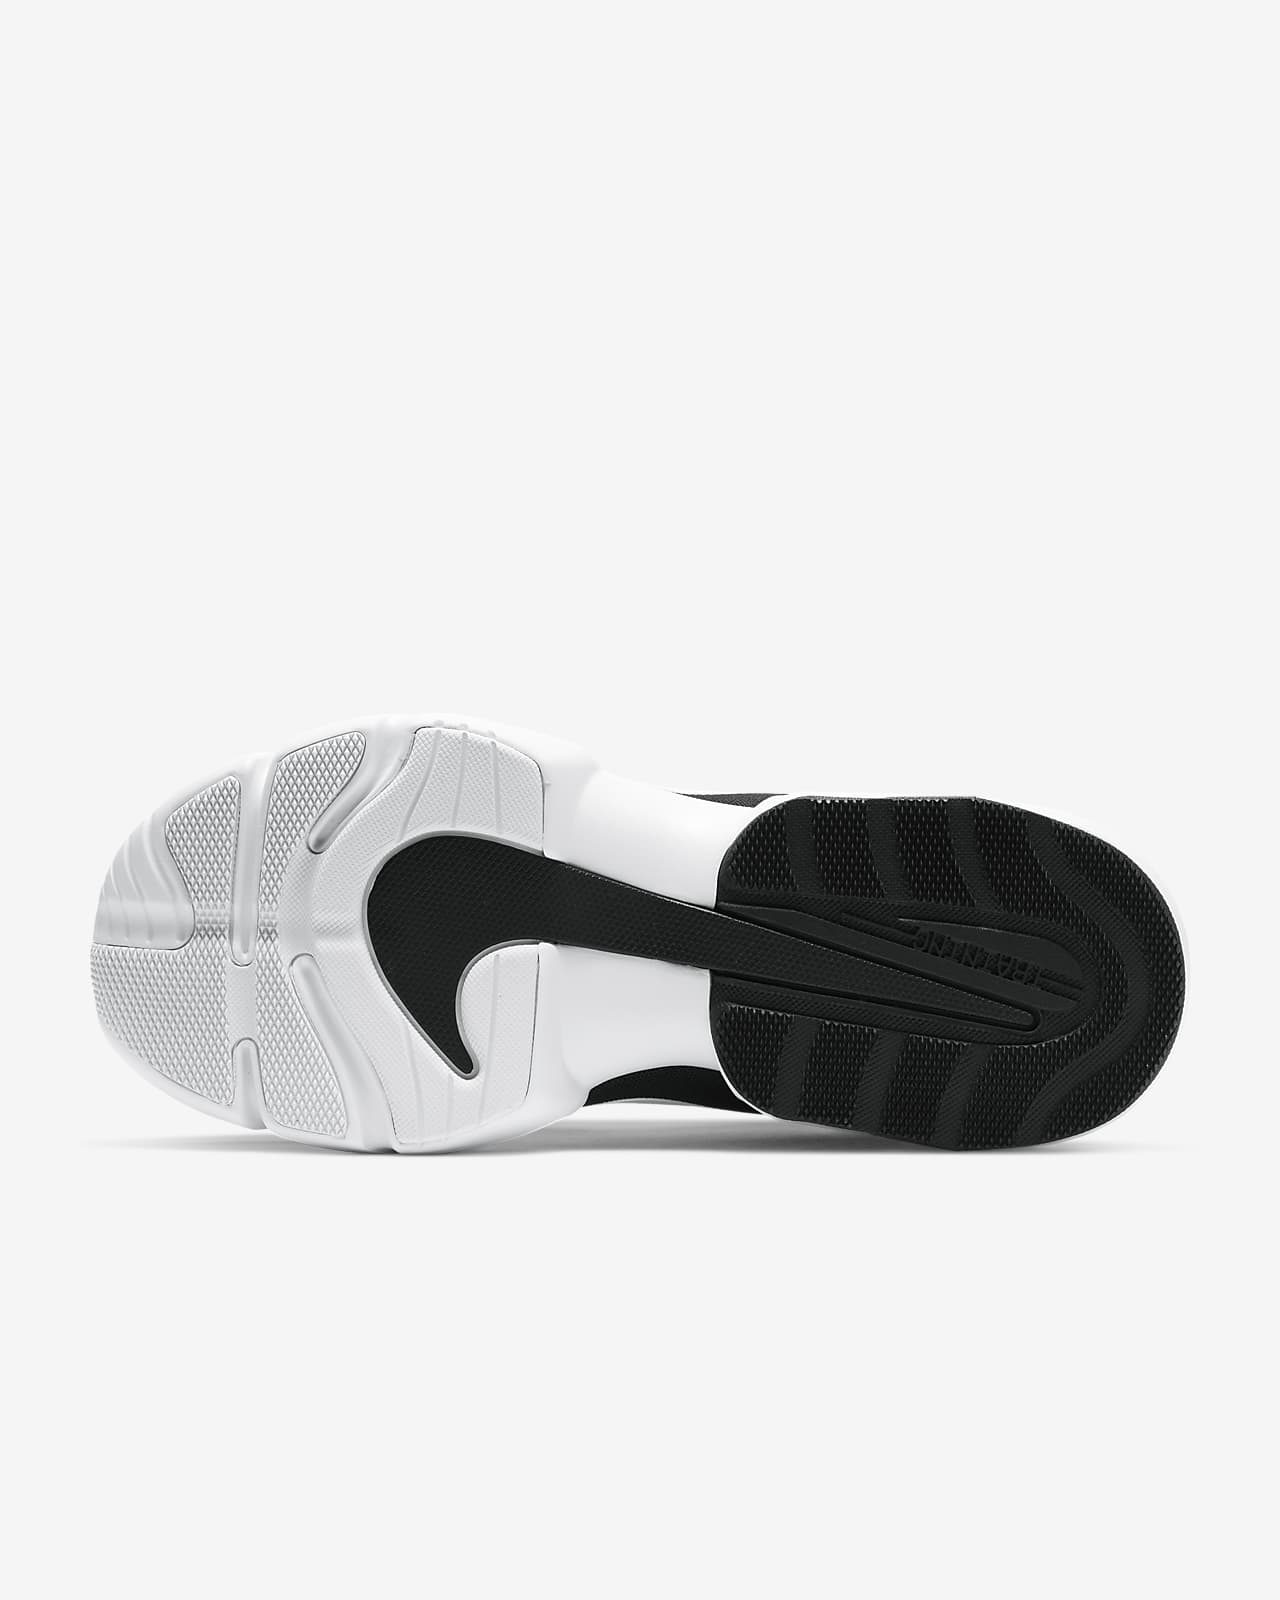 nike black and white training shoes